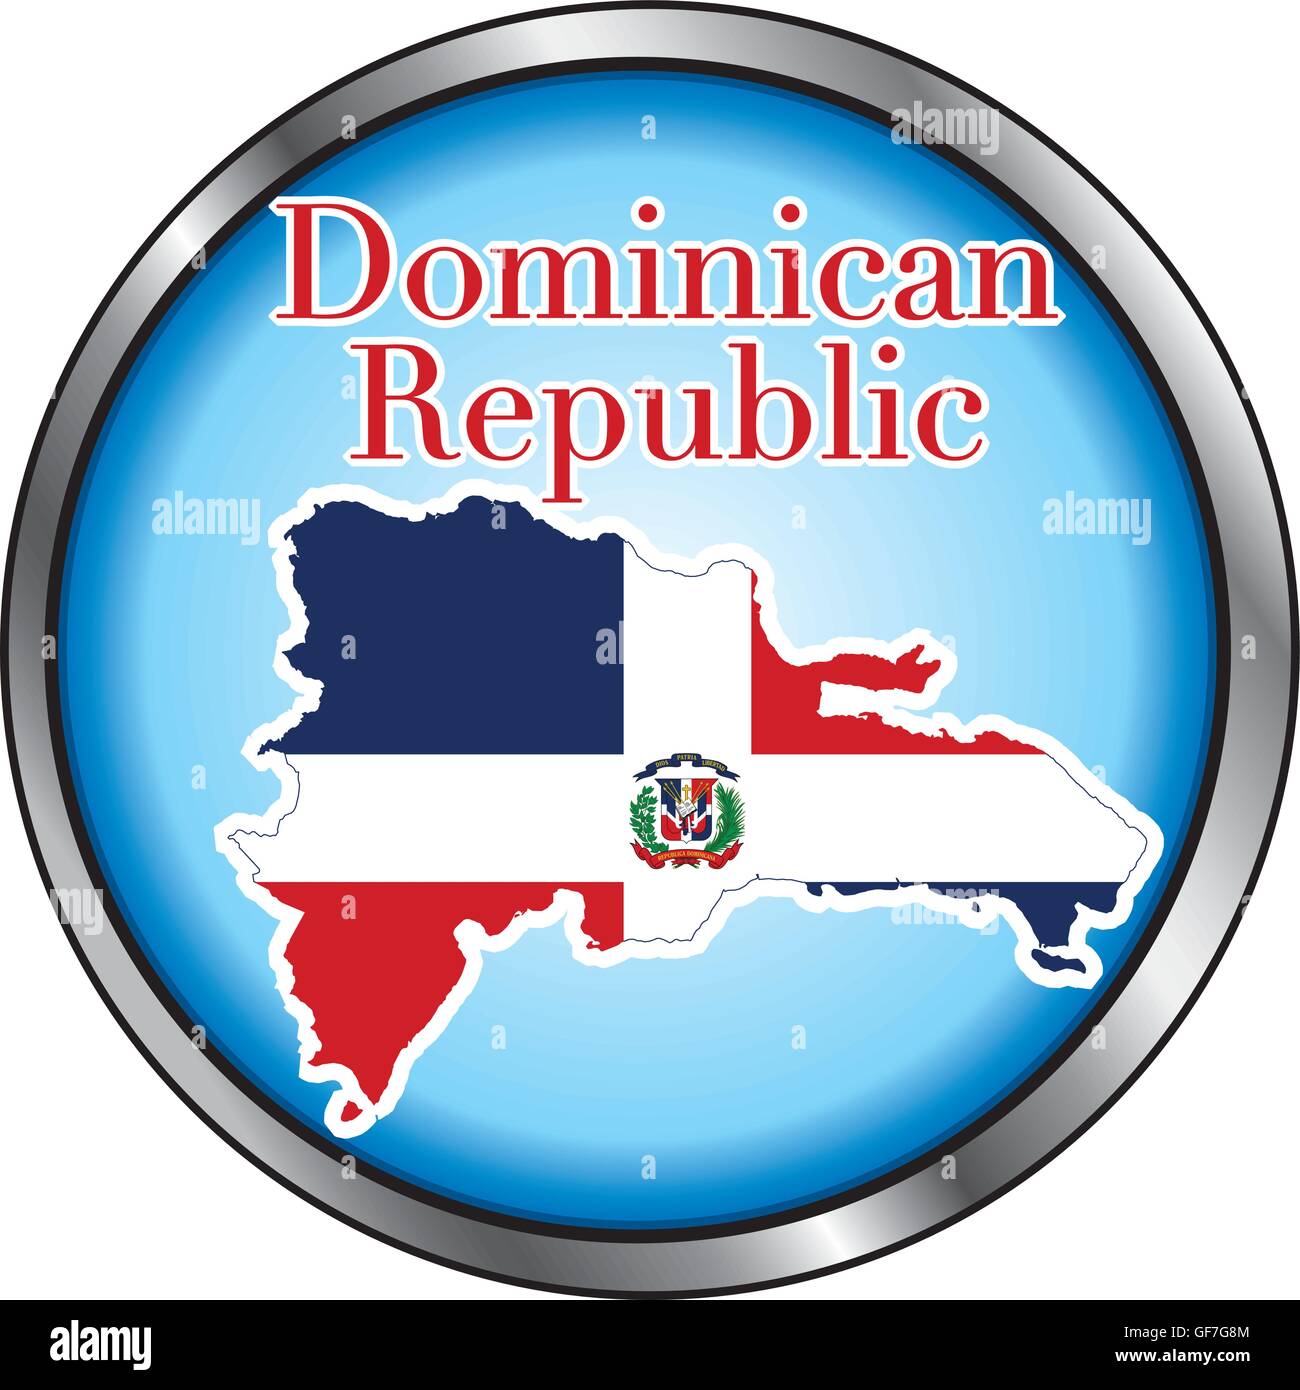 Vektor-Illustration für Dominikanische Republik, Runde Taste. Stock Vektor